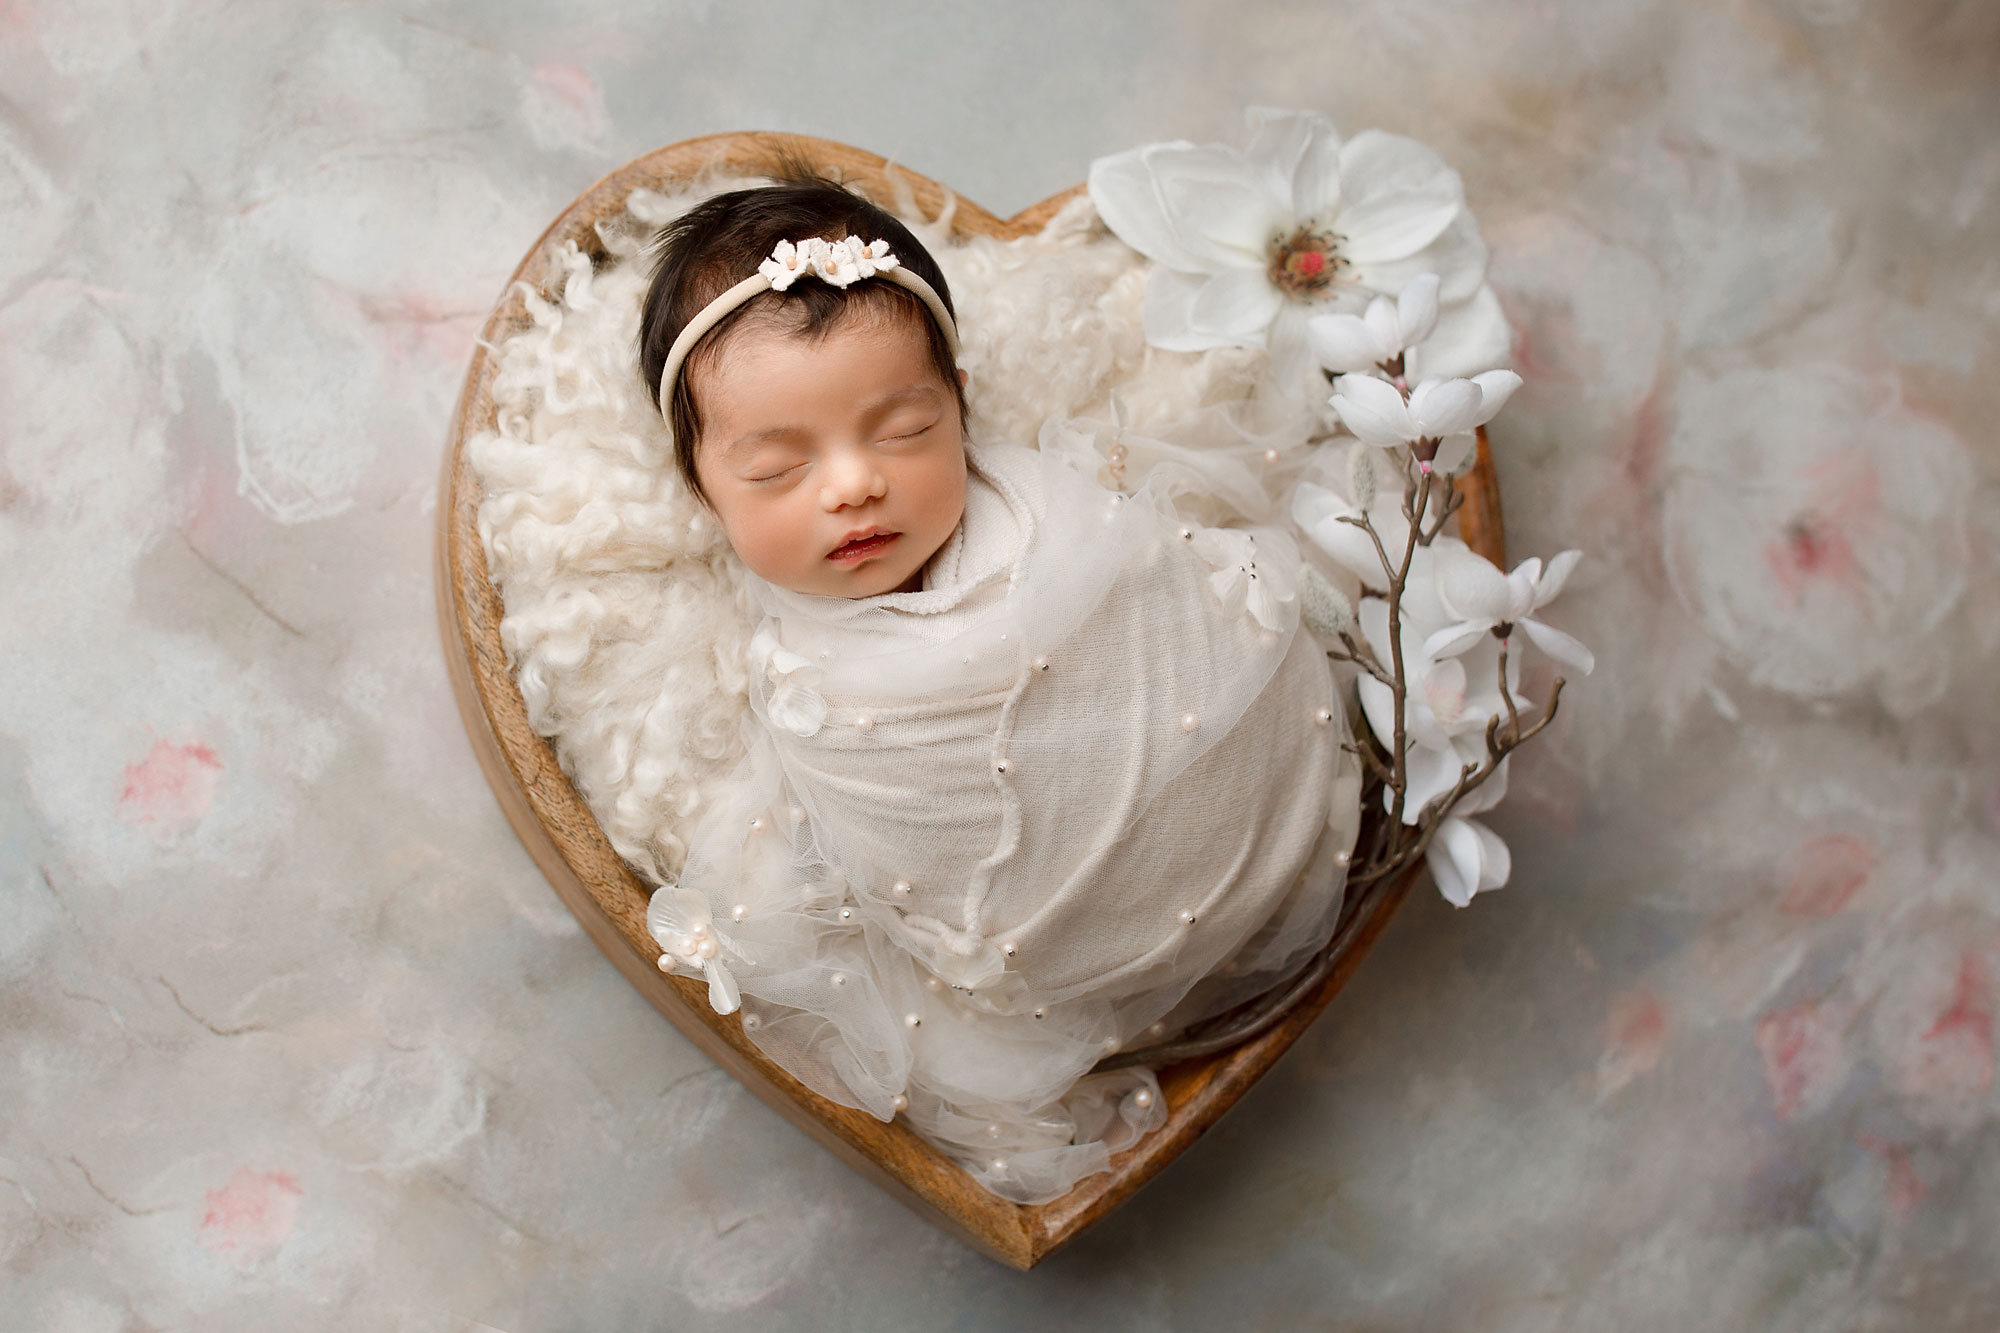 baby sleeping in a basket for newborn photos